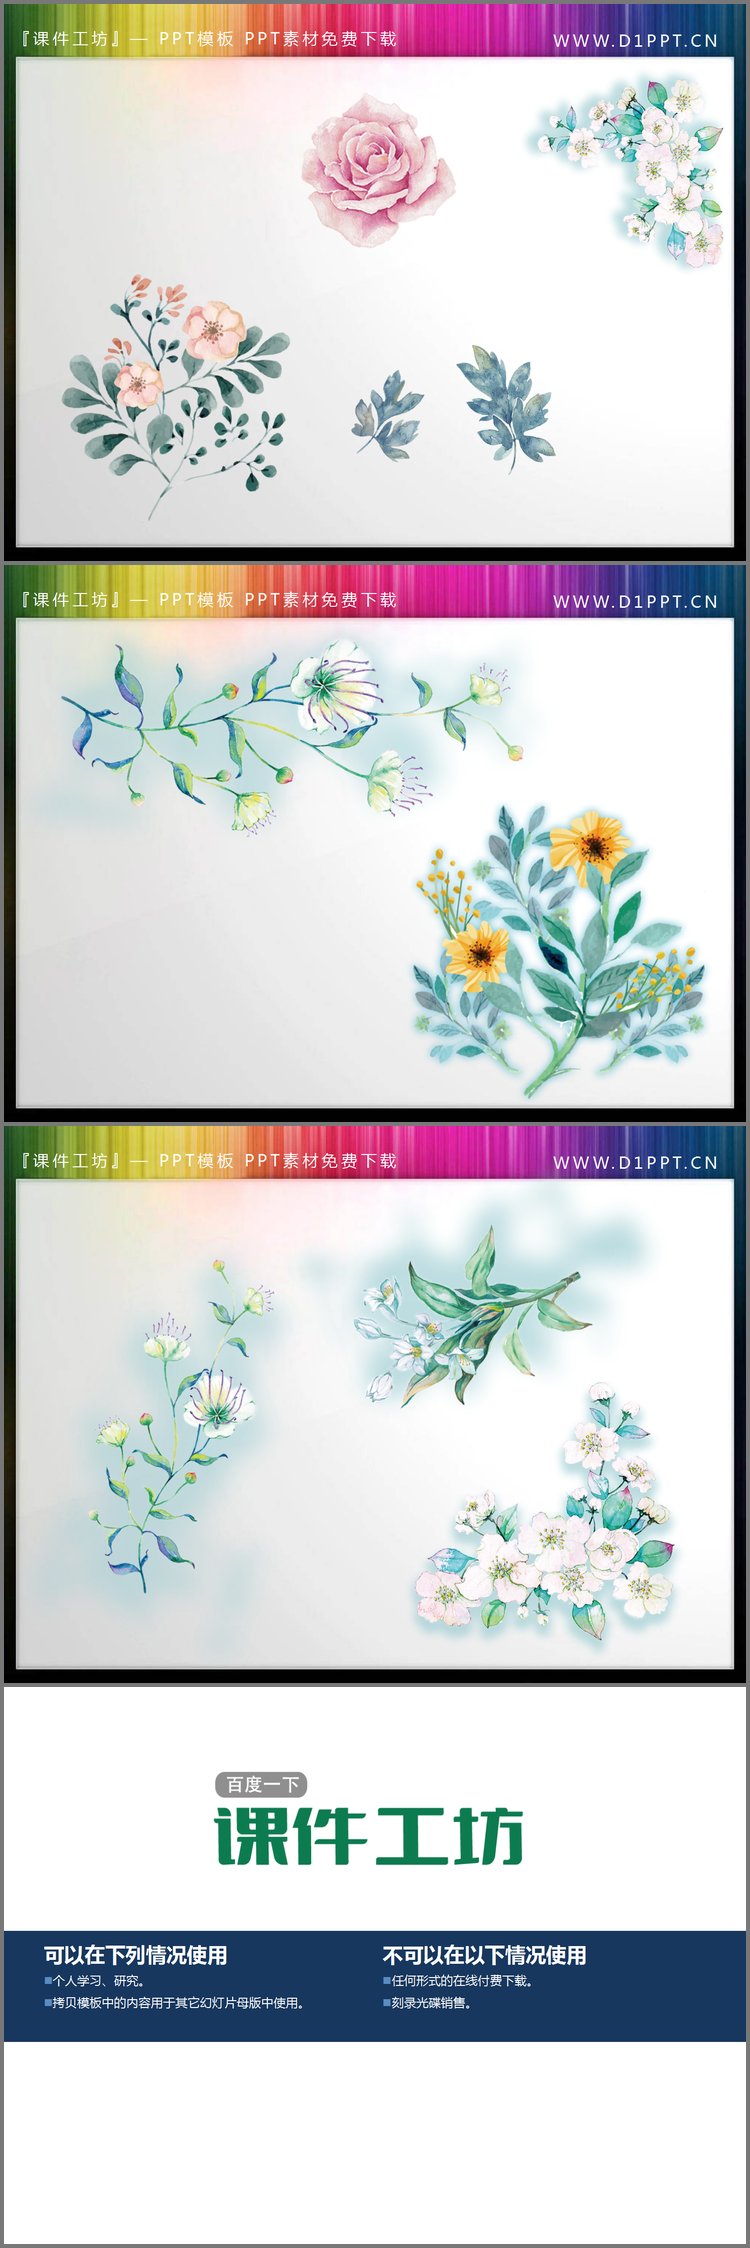 PPT模板-一组清新唯美水彩花卉PPT素材